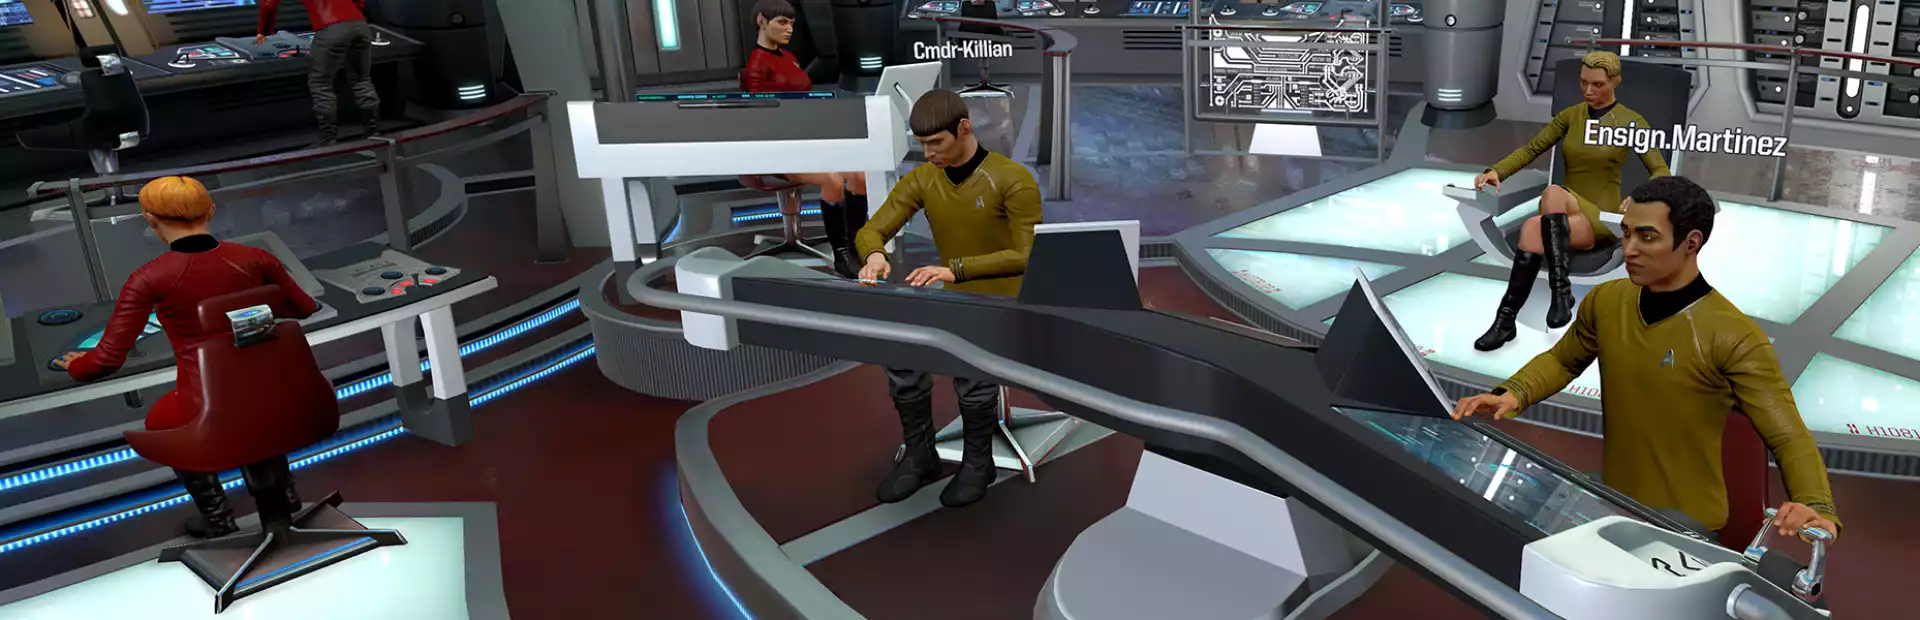 Star Trek: Bridge Crew Steam Key China